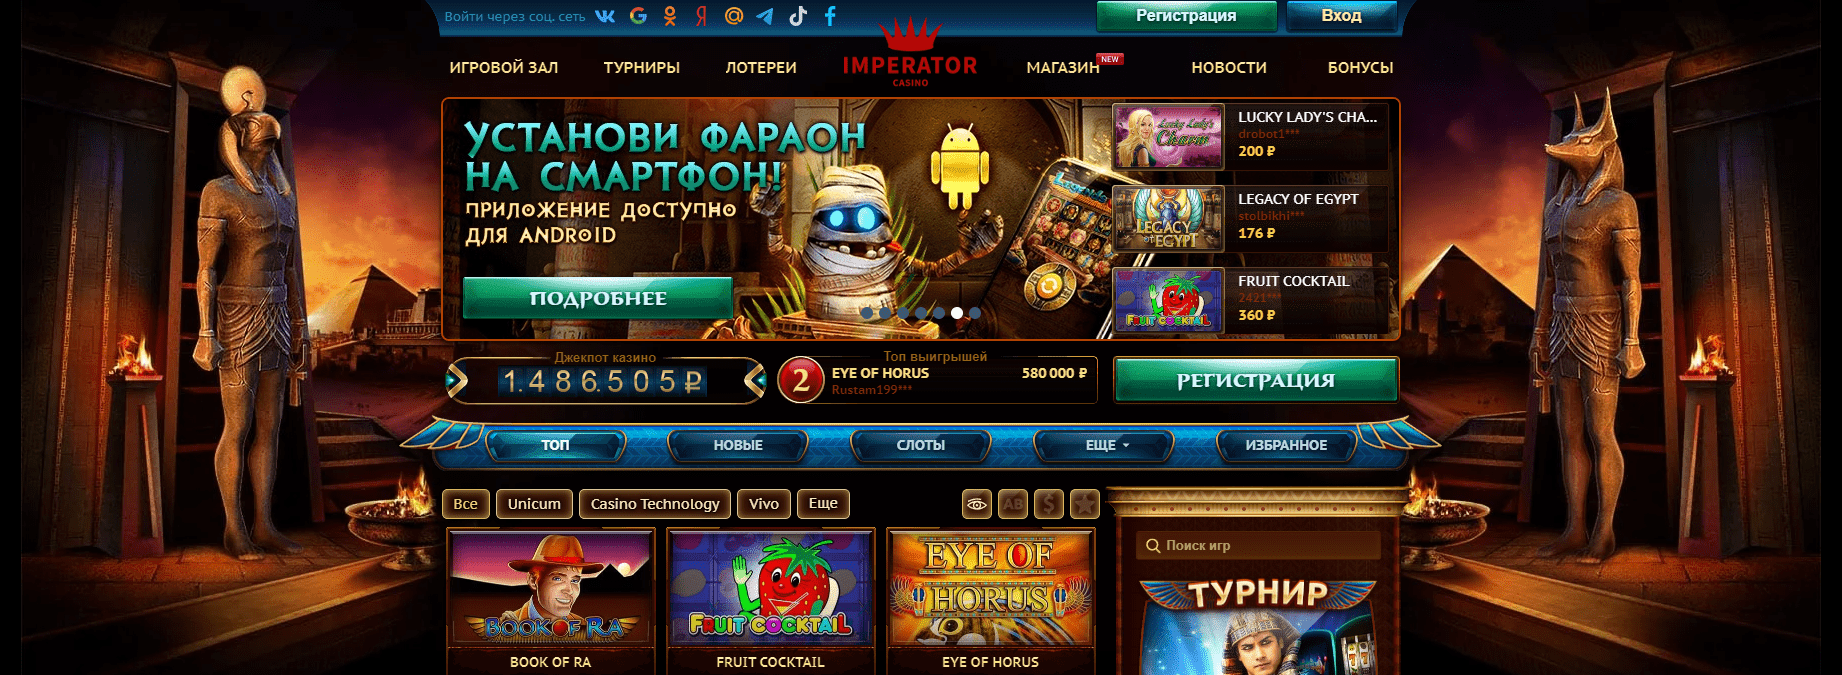 Site oficial do casino Imperator